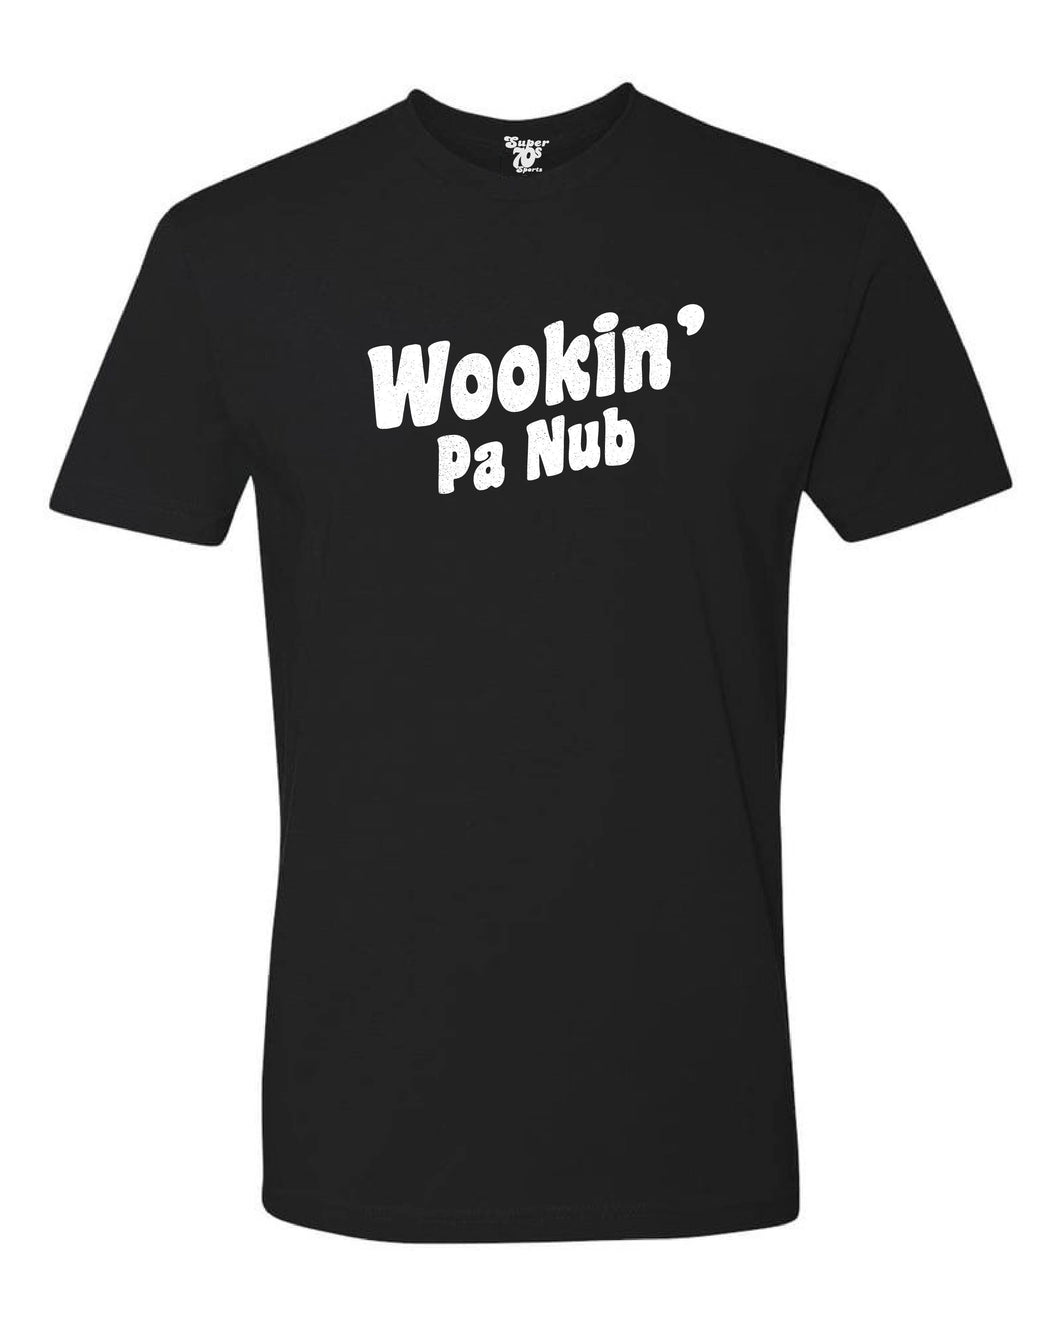 Wookin' Pa Nub